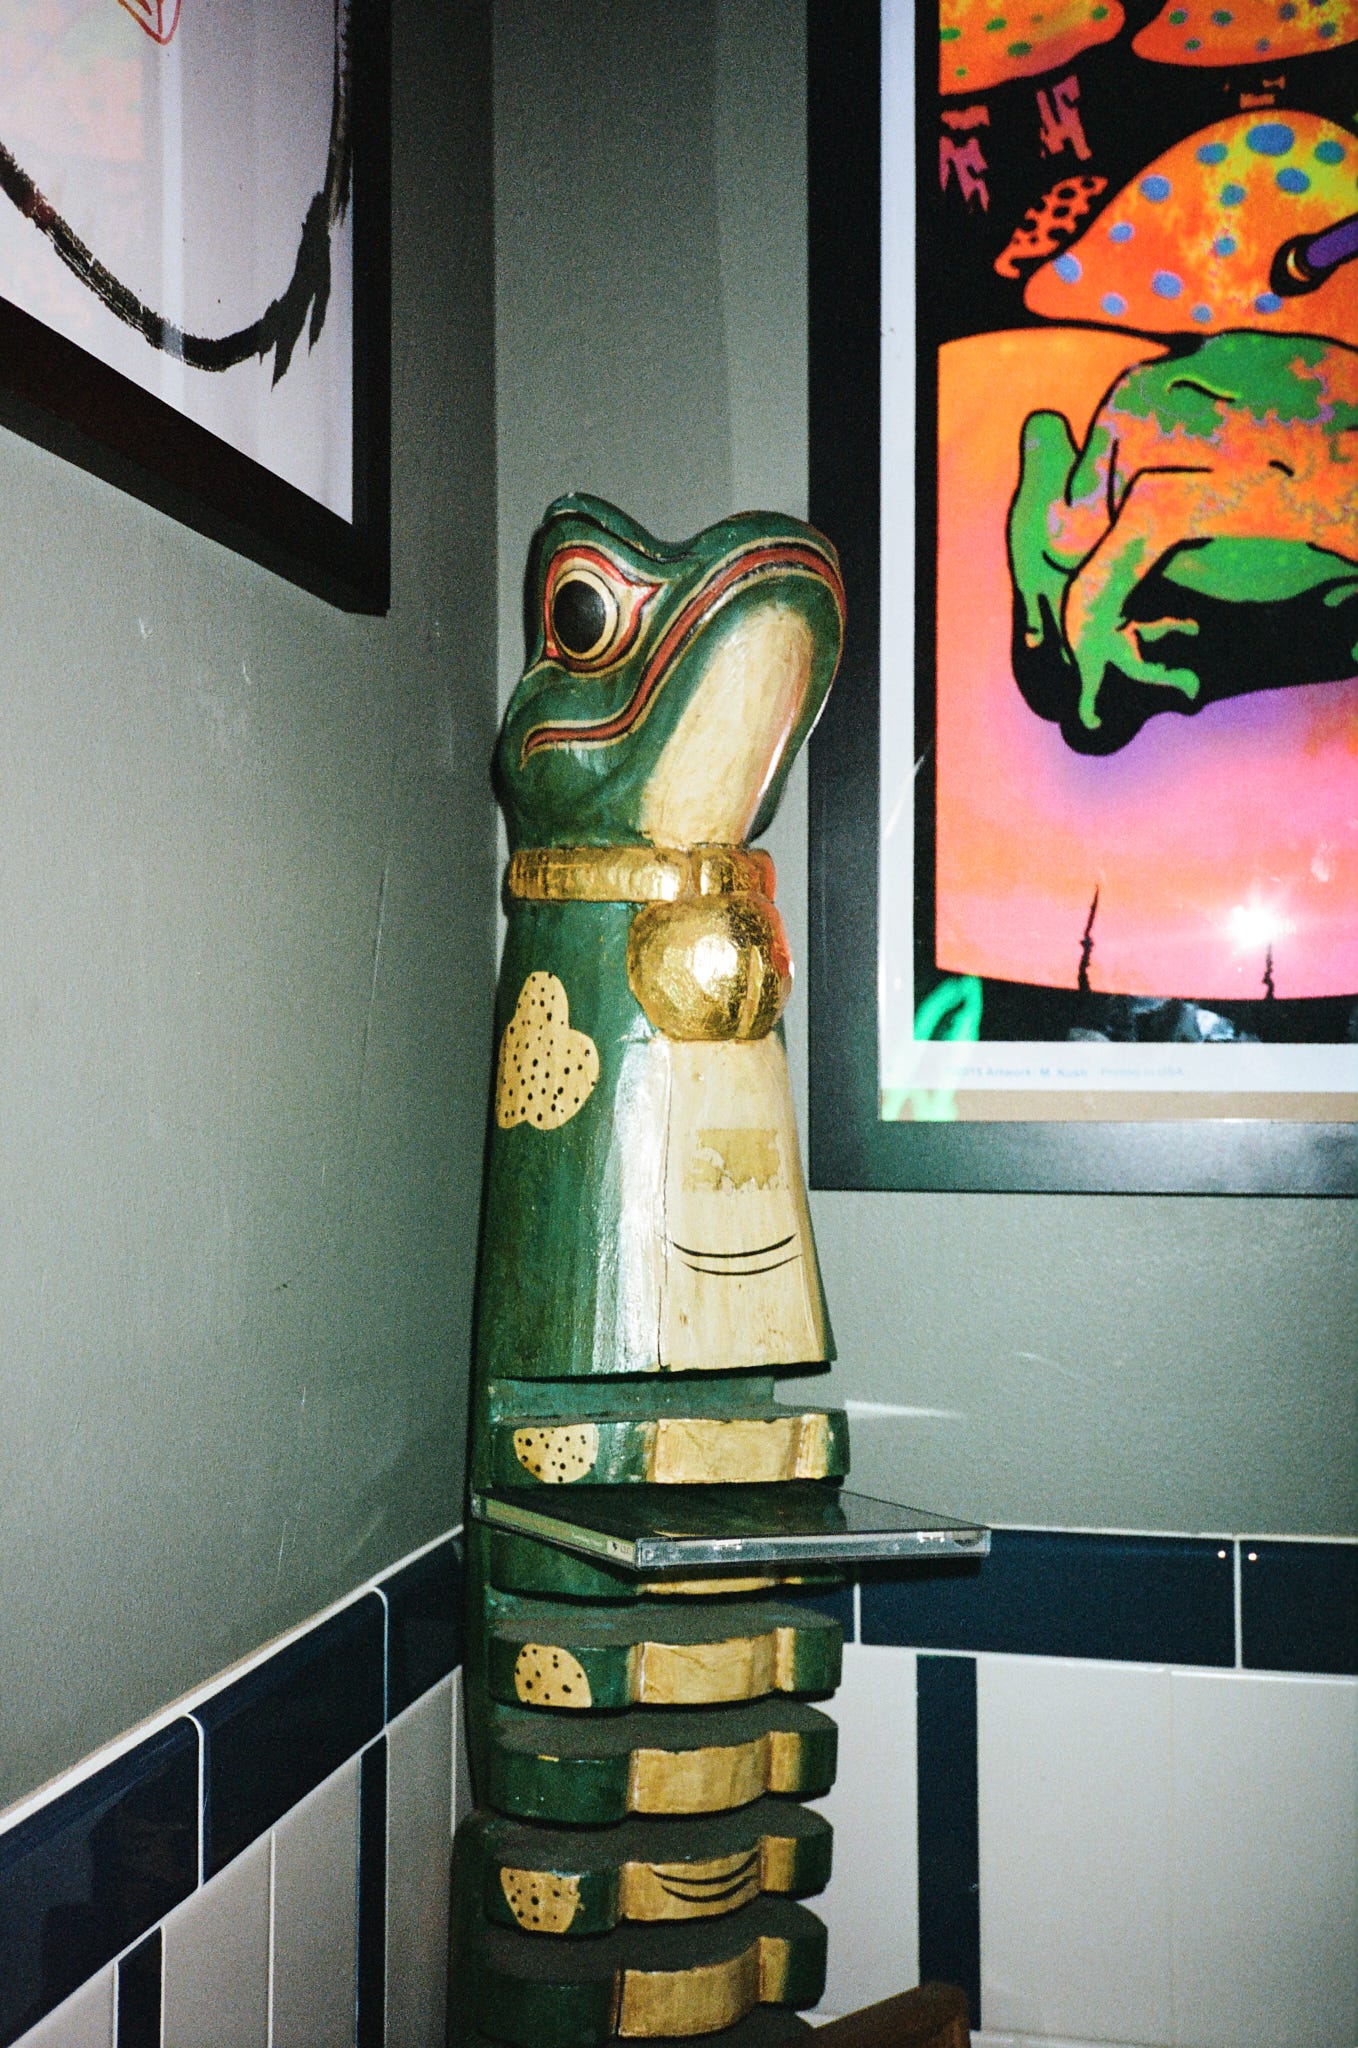 A frog figurine inside Pinyon's bathroom